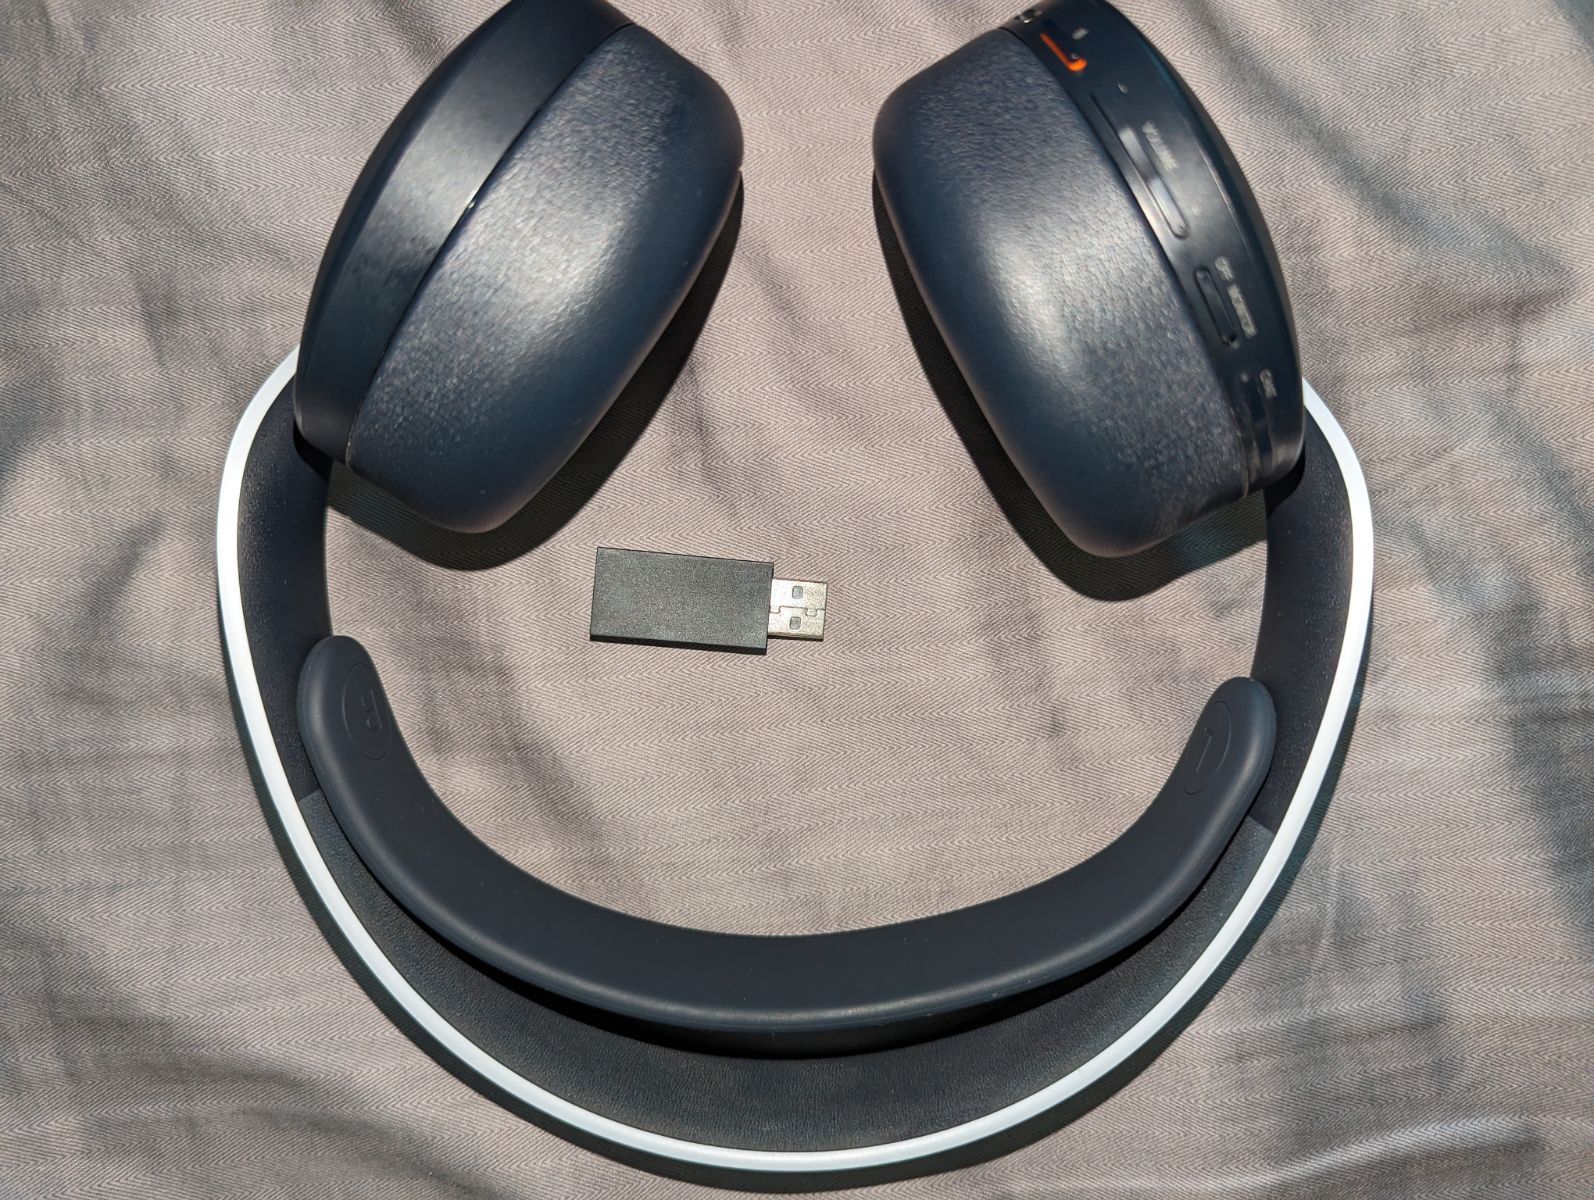 PS5 Pulse 3D Wireless Headset